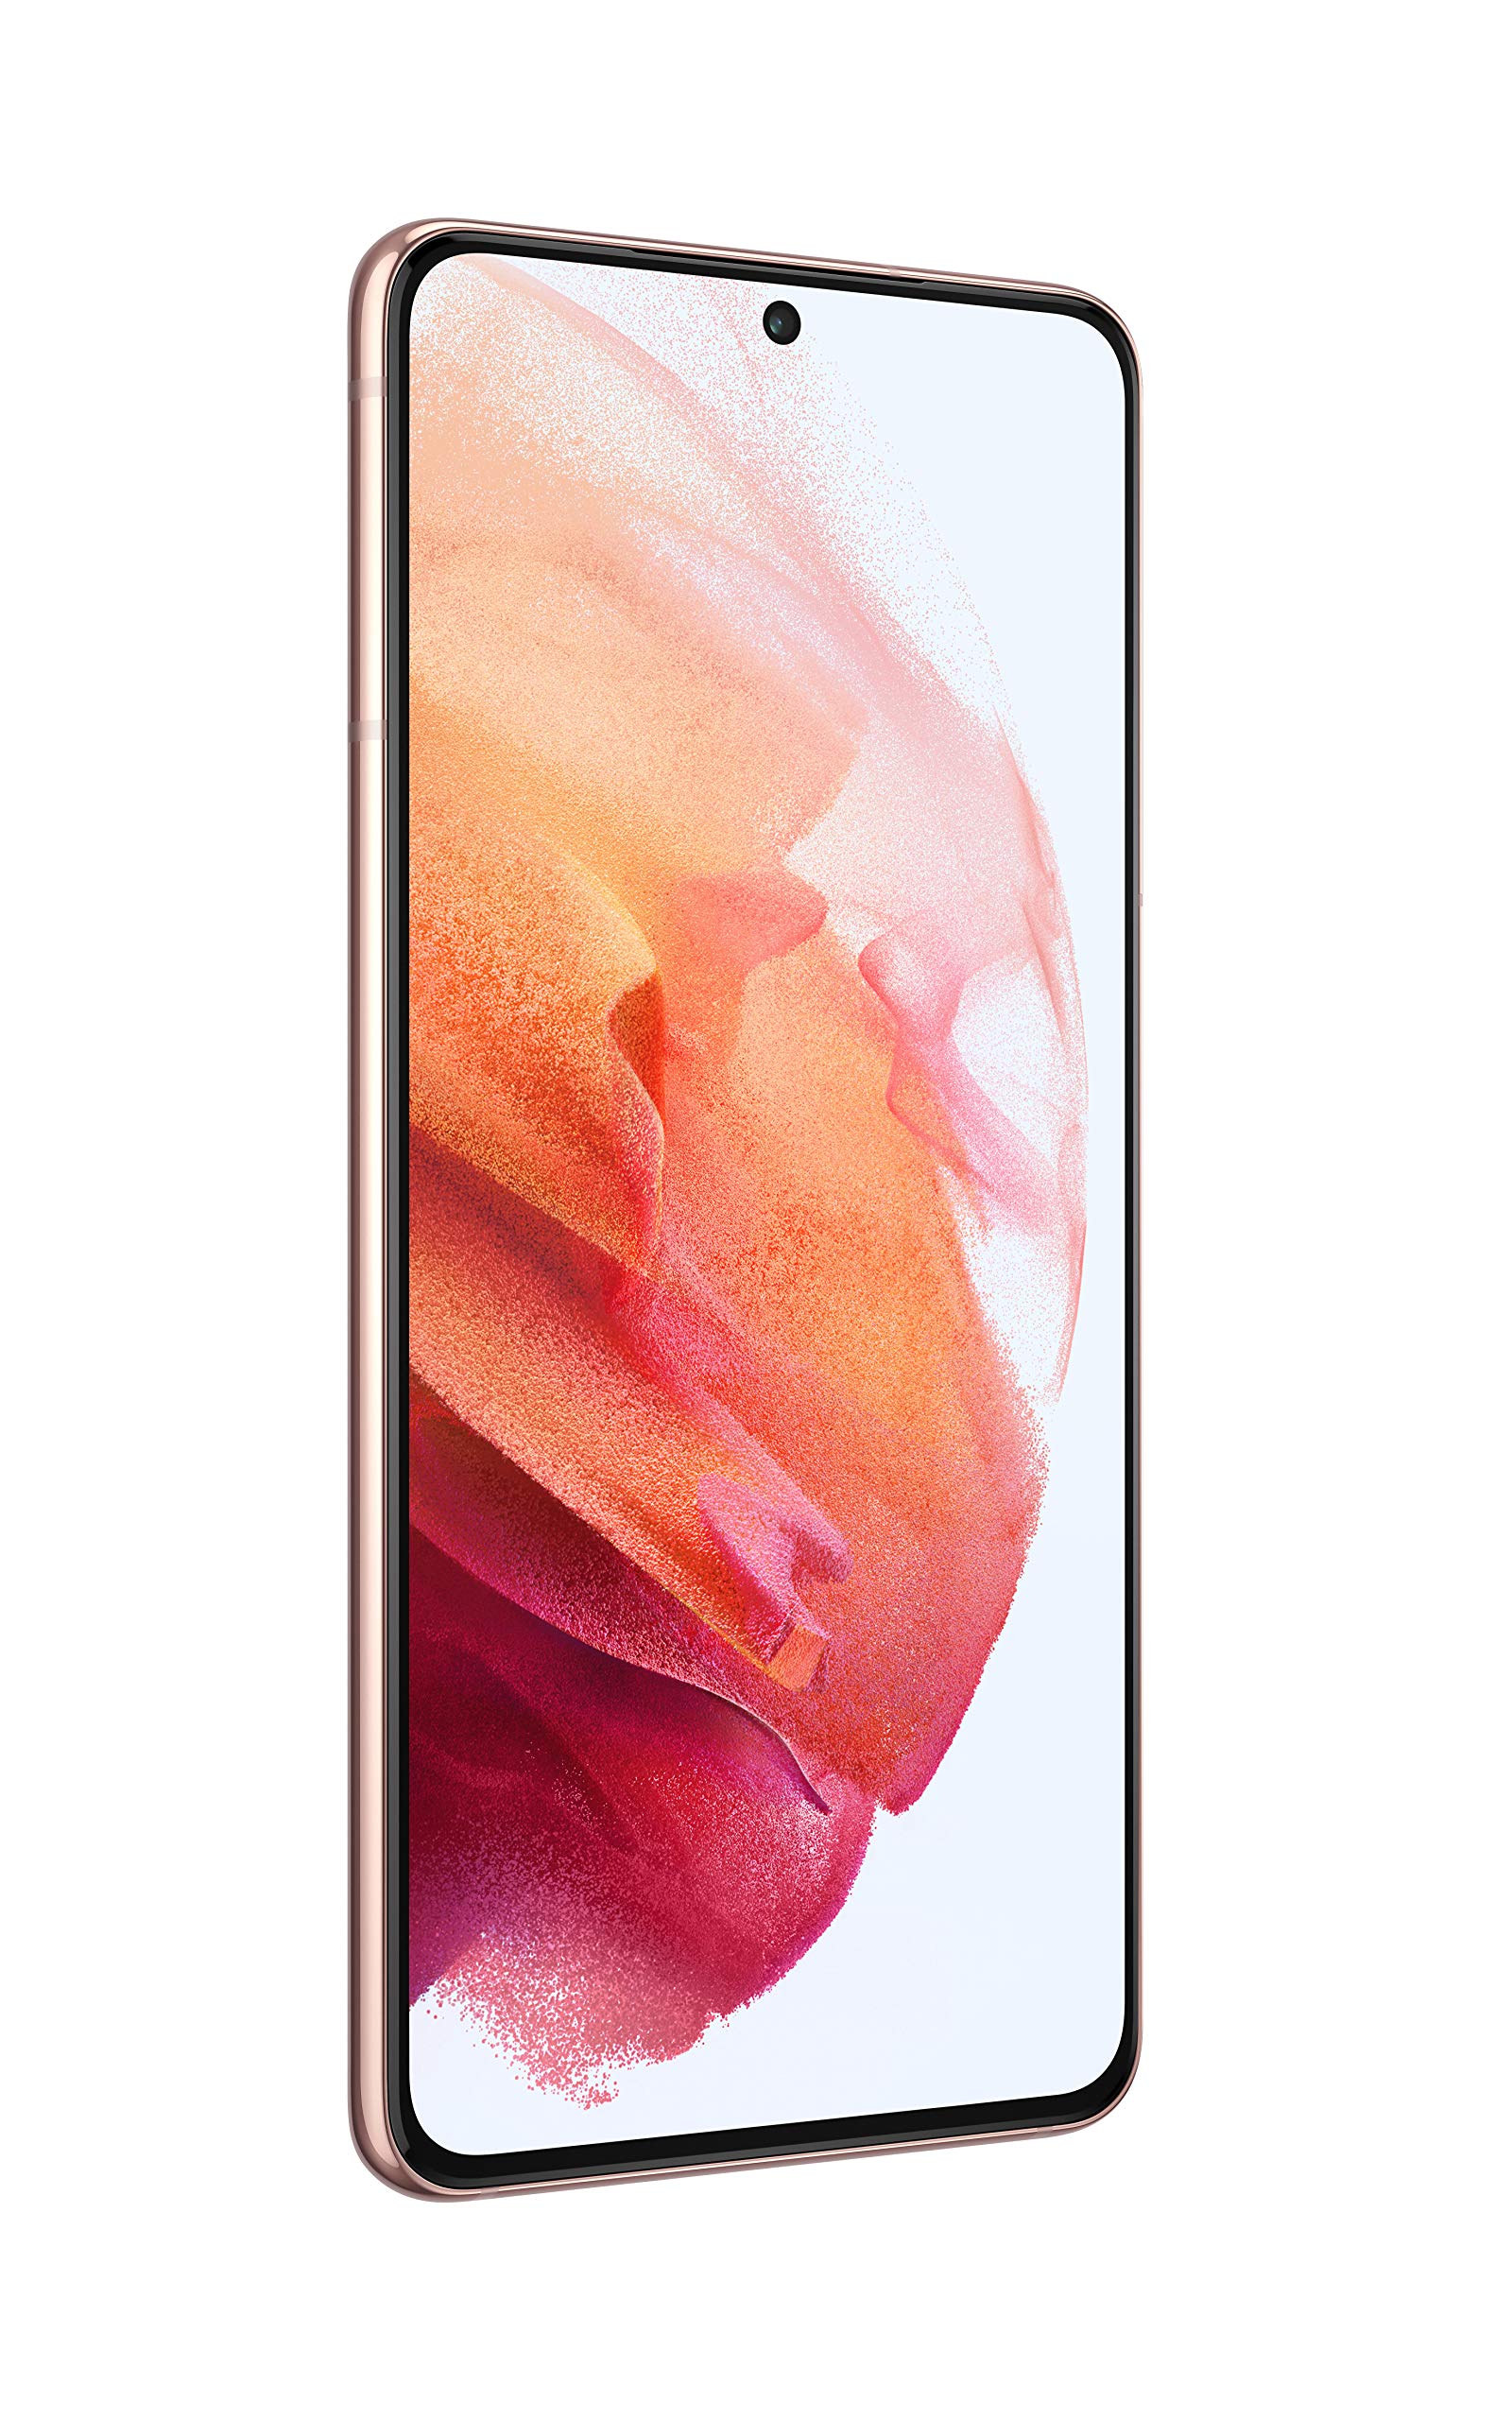 Samsung Galaxy S21 5G | Factory Unlocked Android Cell Phone | US Version 5G Smartphone | Pro-Grade Camera, 8K Video, 64MP High Res | 128GB, Phantom Pink (SM-G991UZIAXAA)